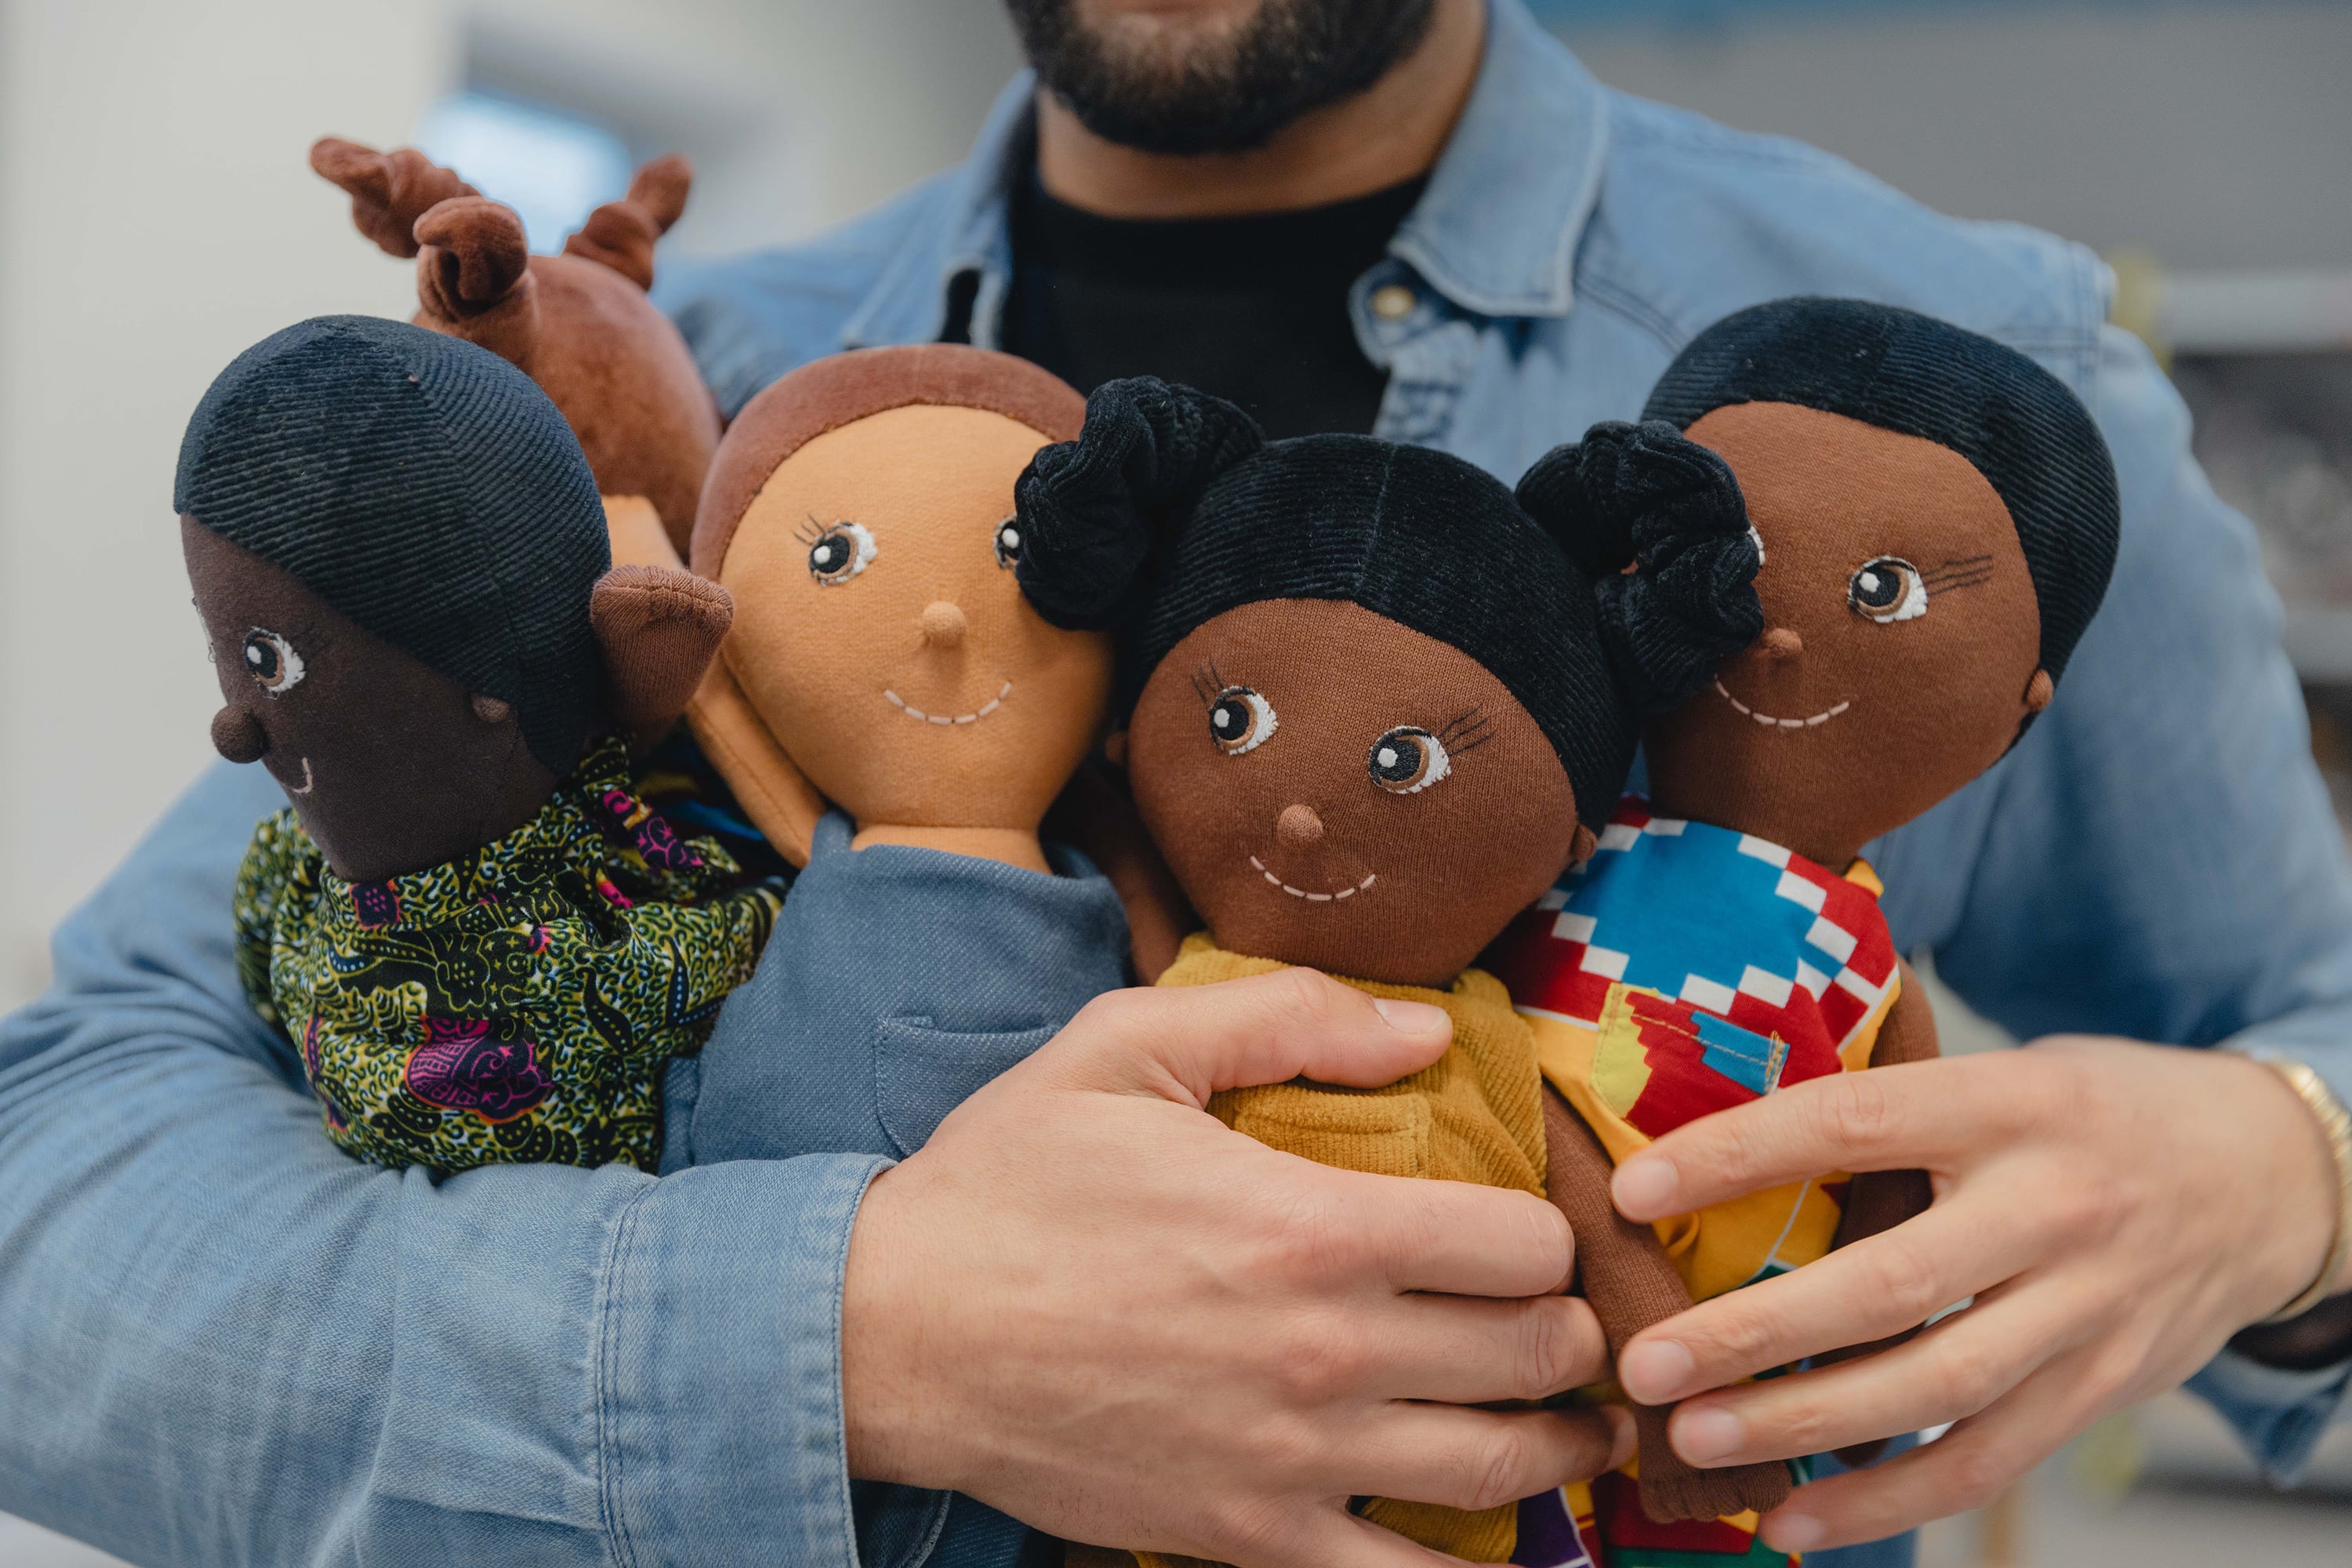 Diversity is child's play: David Amoateng produces fair diversity dolls - 